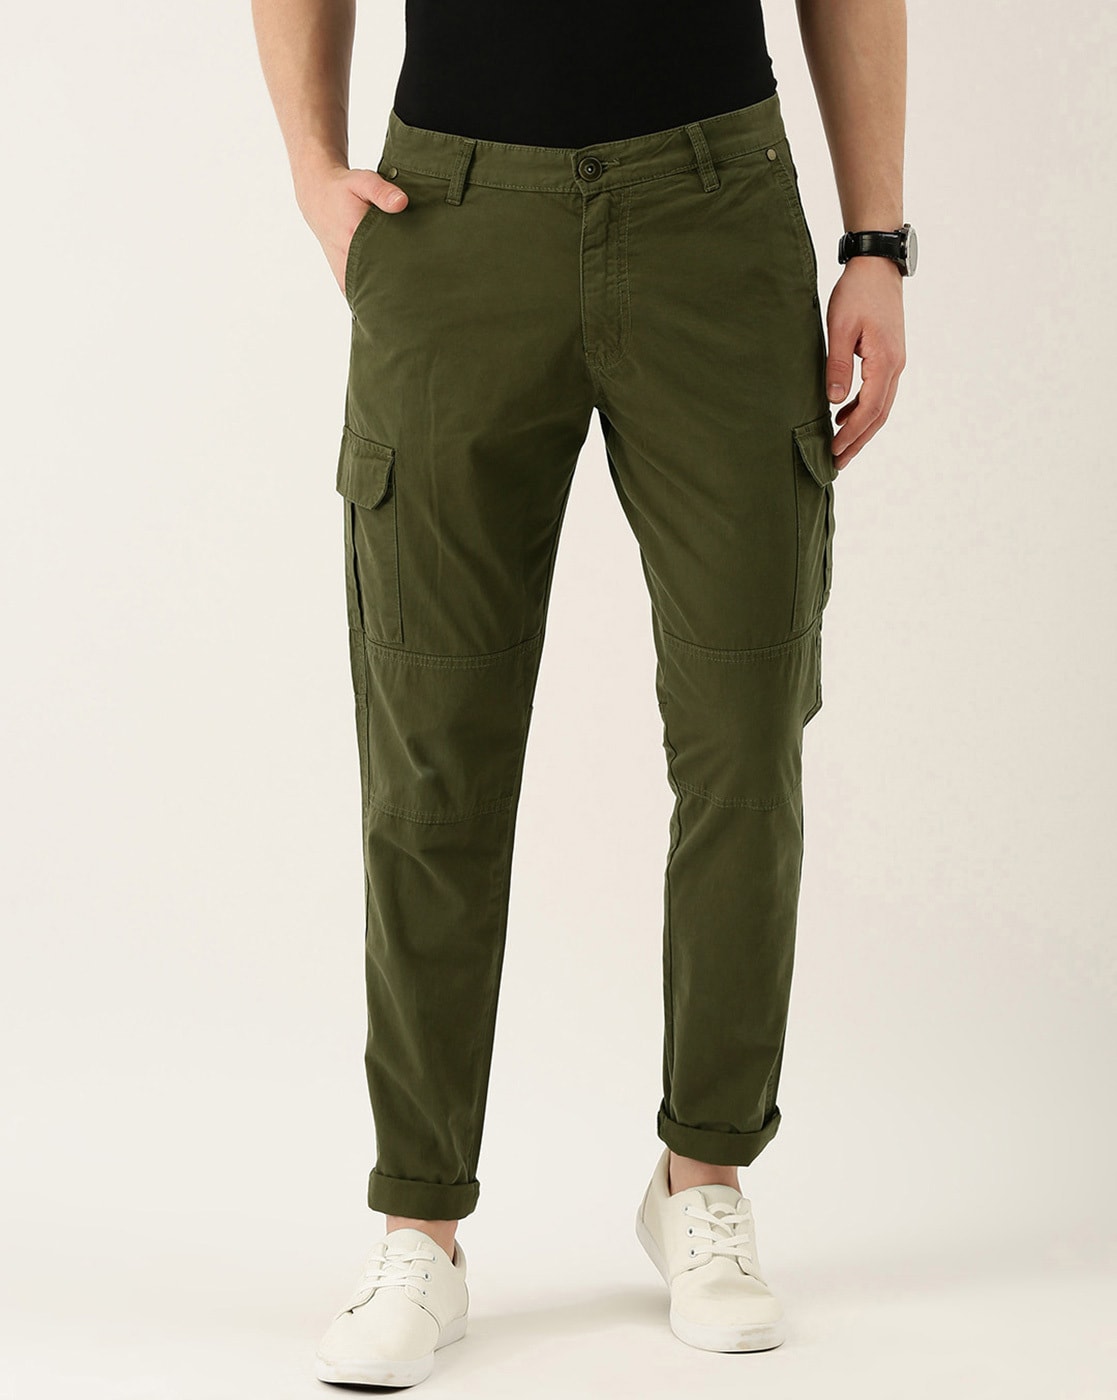 Baggy Camo Cargo Pants Men - Military Camouflage Pants